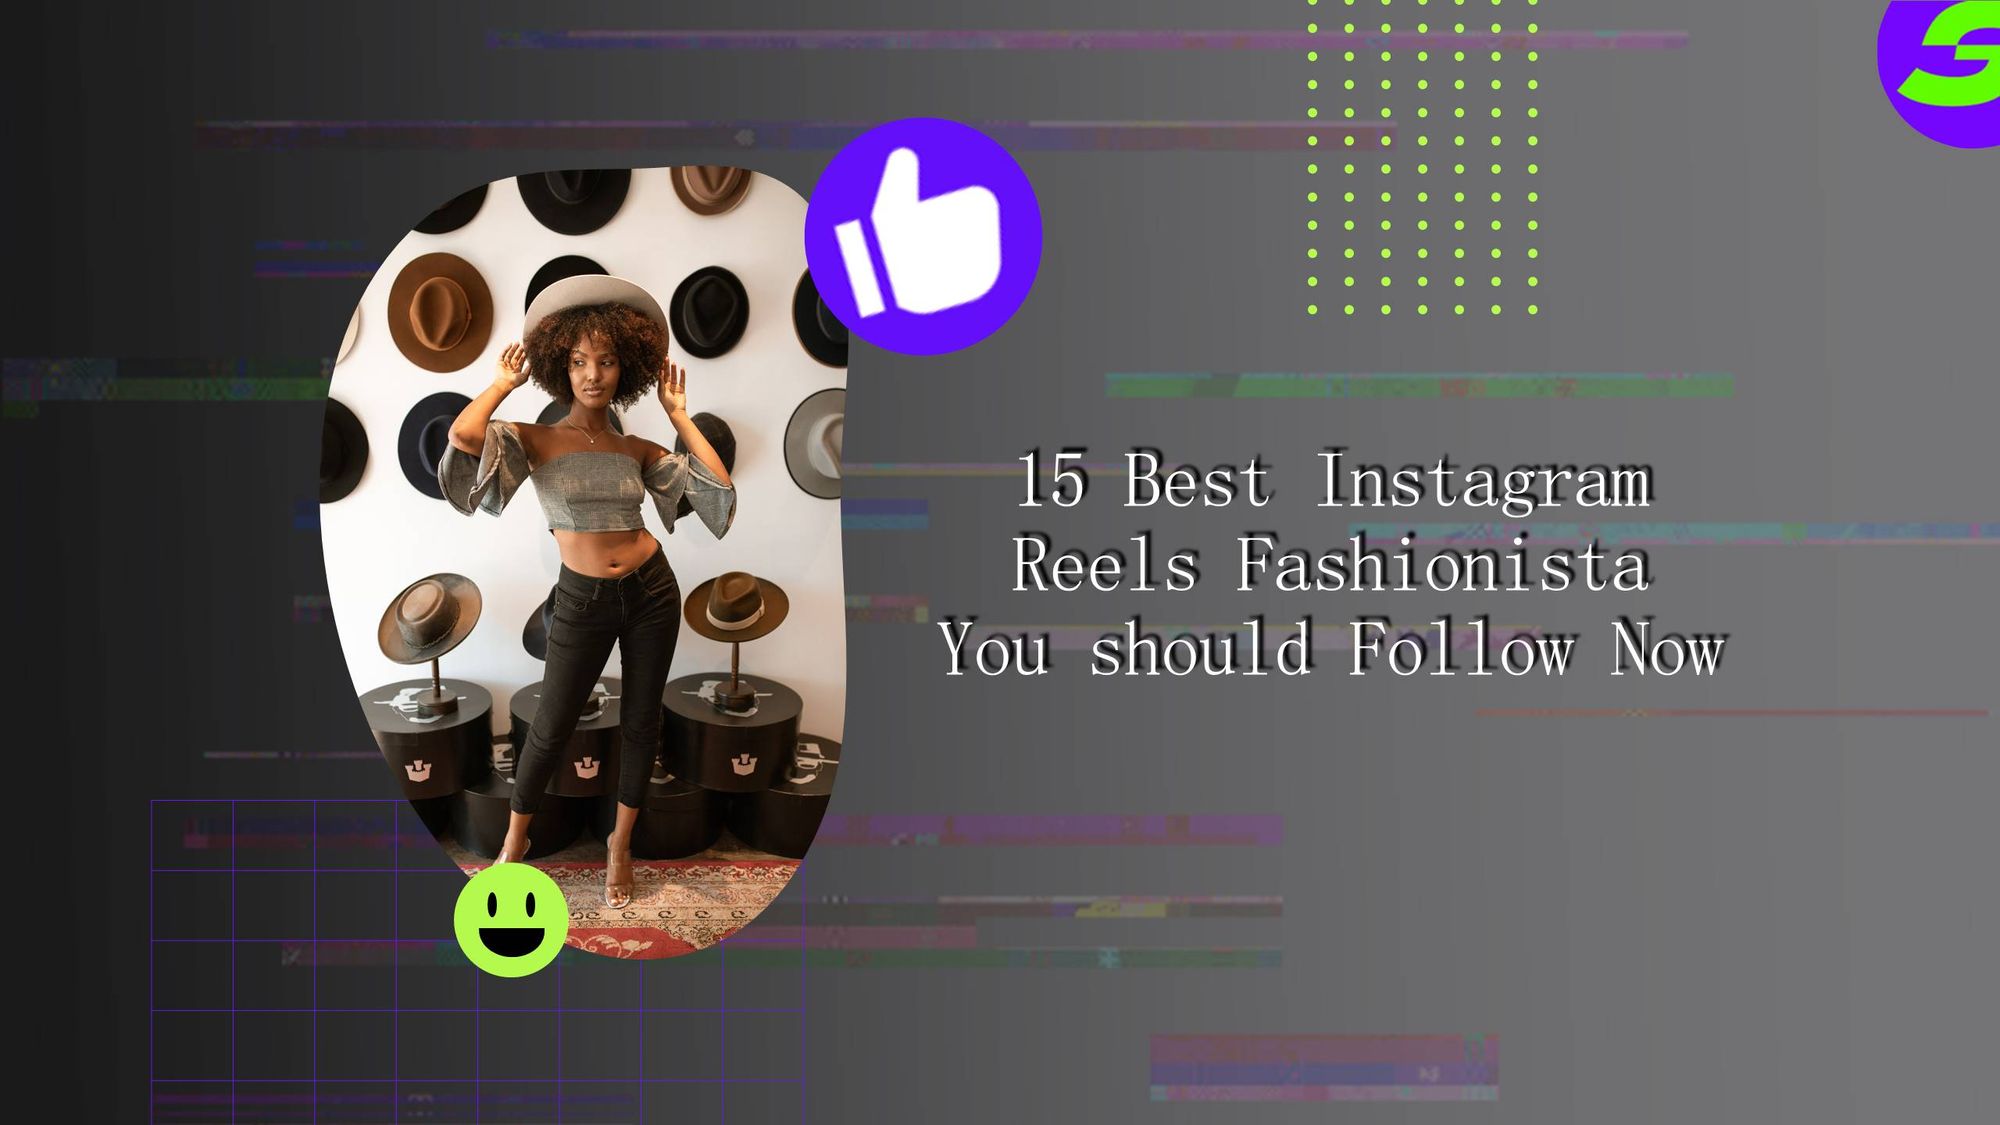 15 Best Instagram Reels Fashionista you should follow now